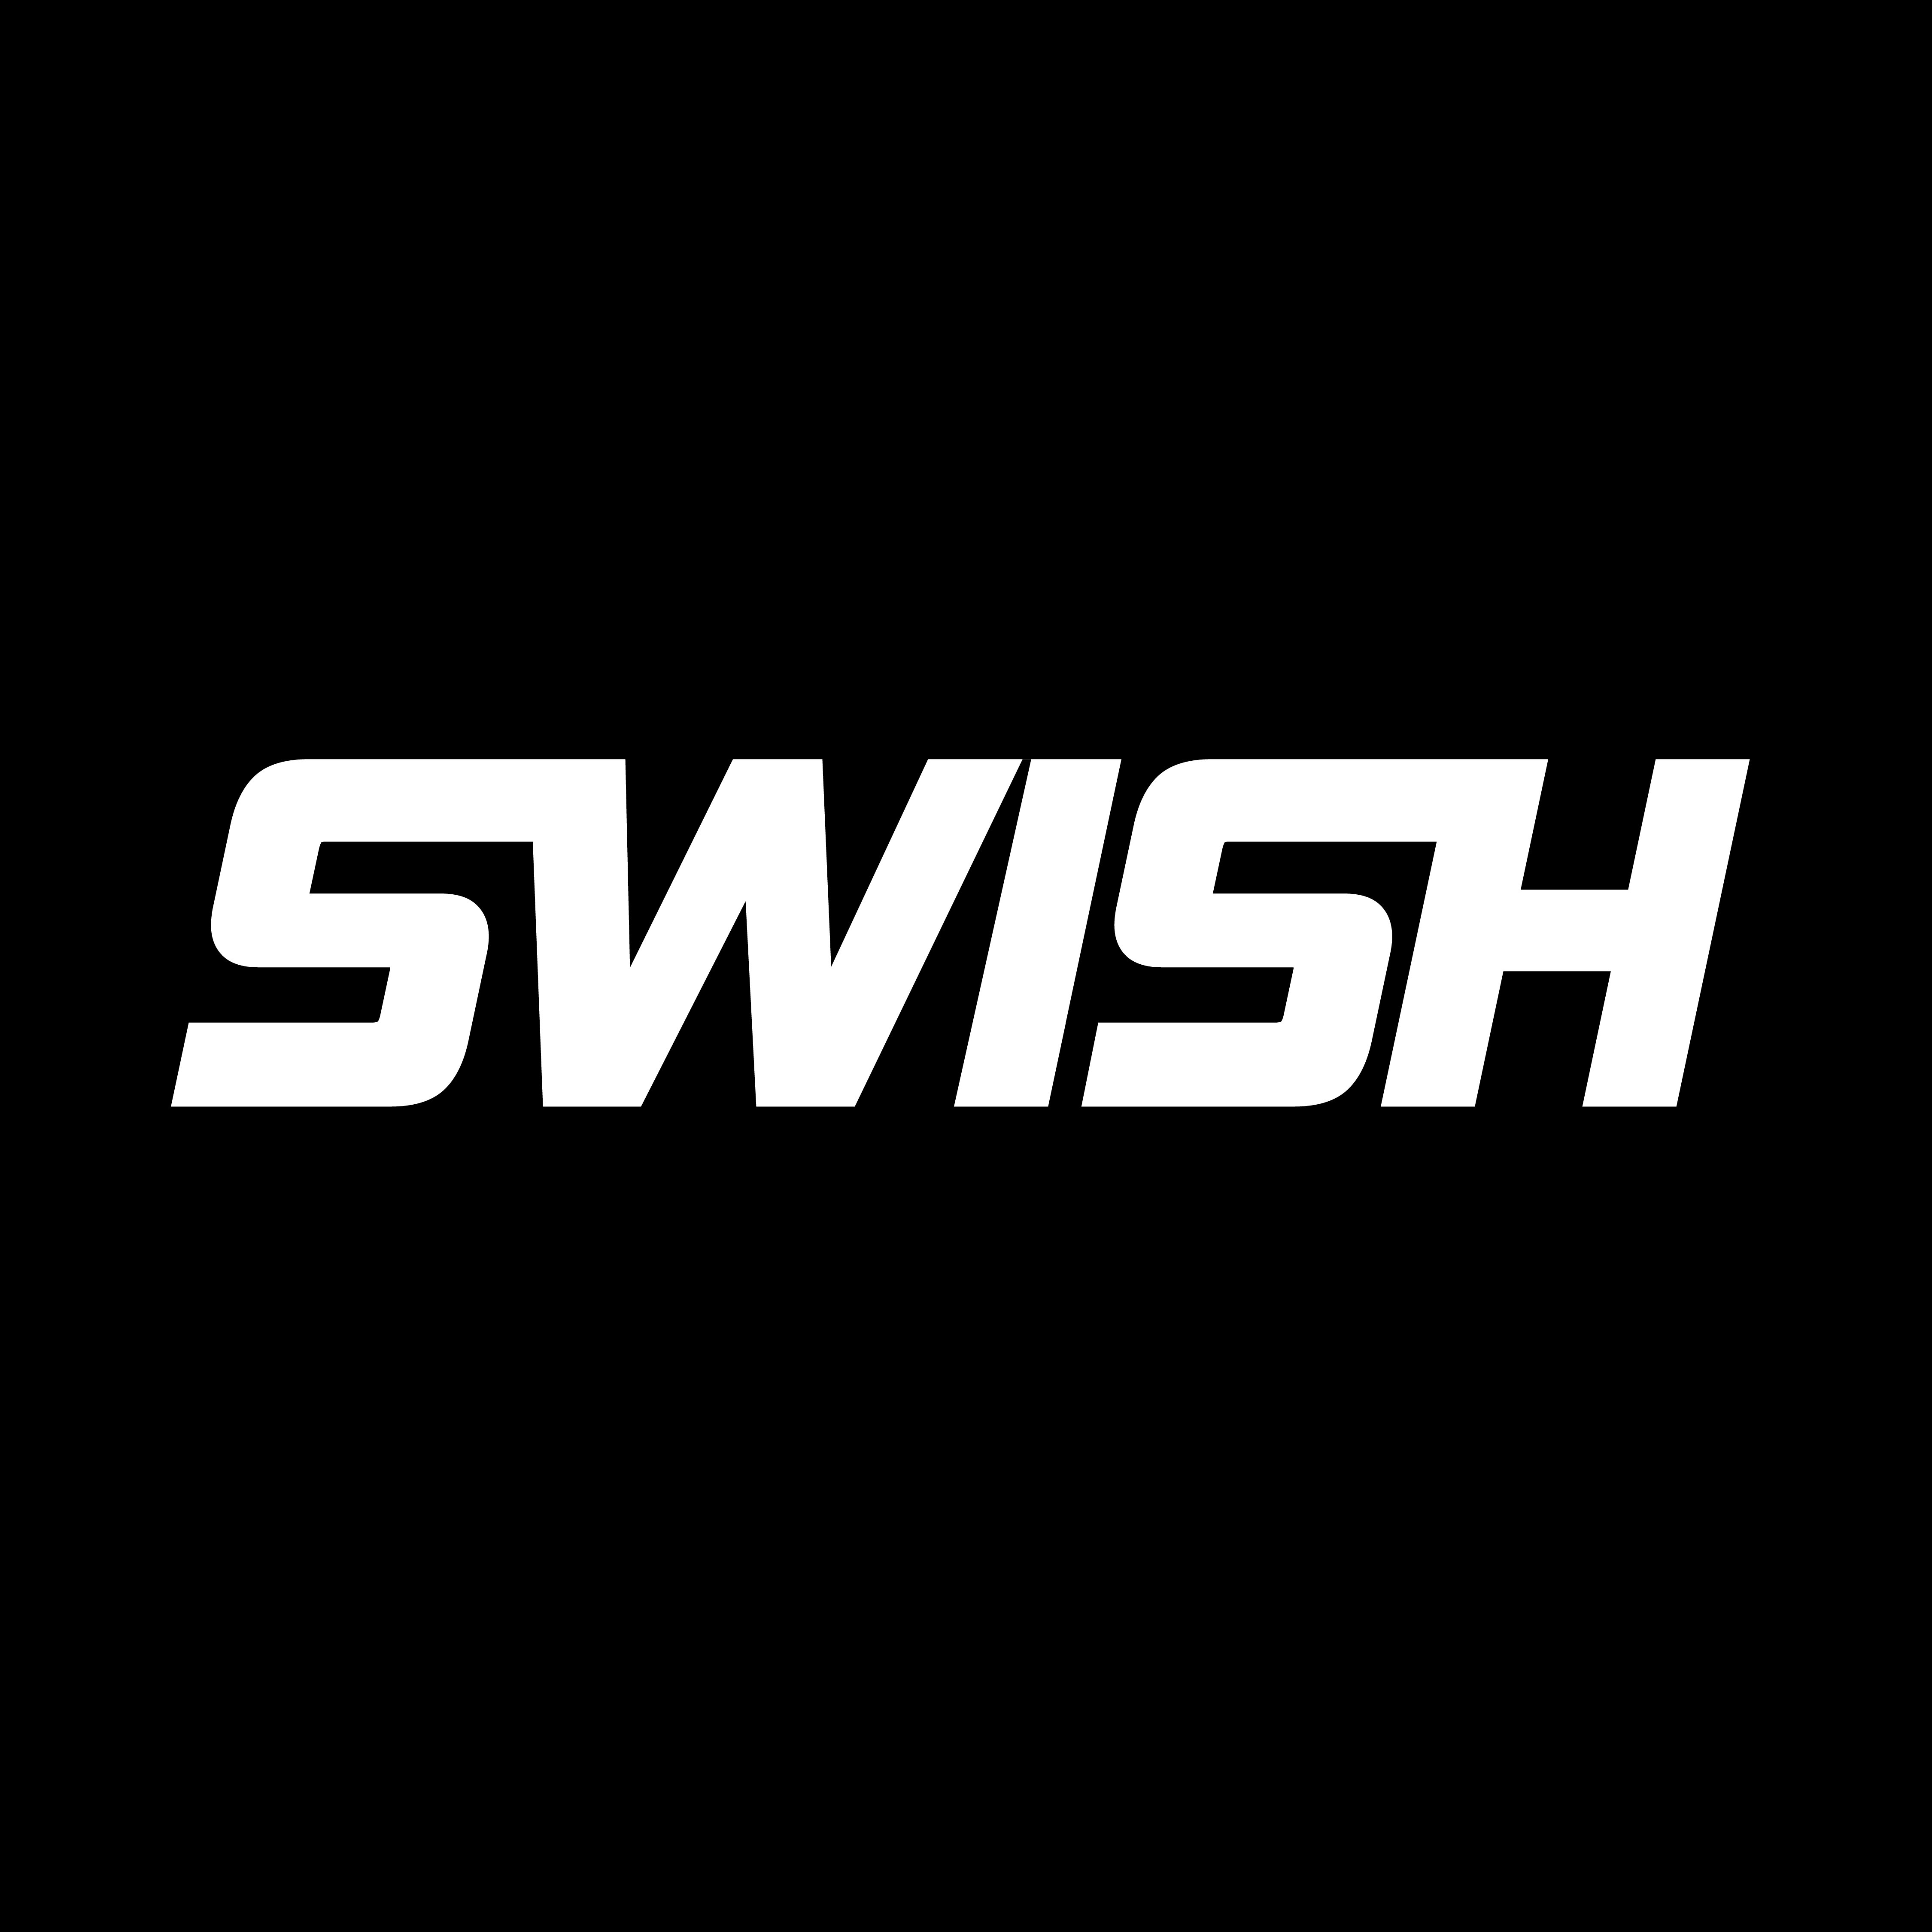 Swish Logo